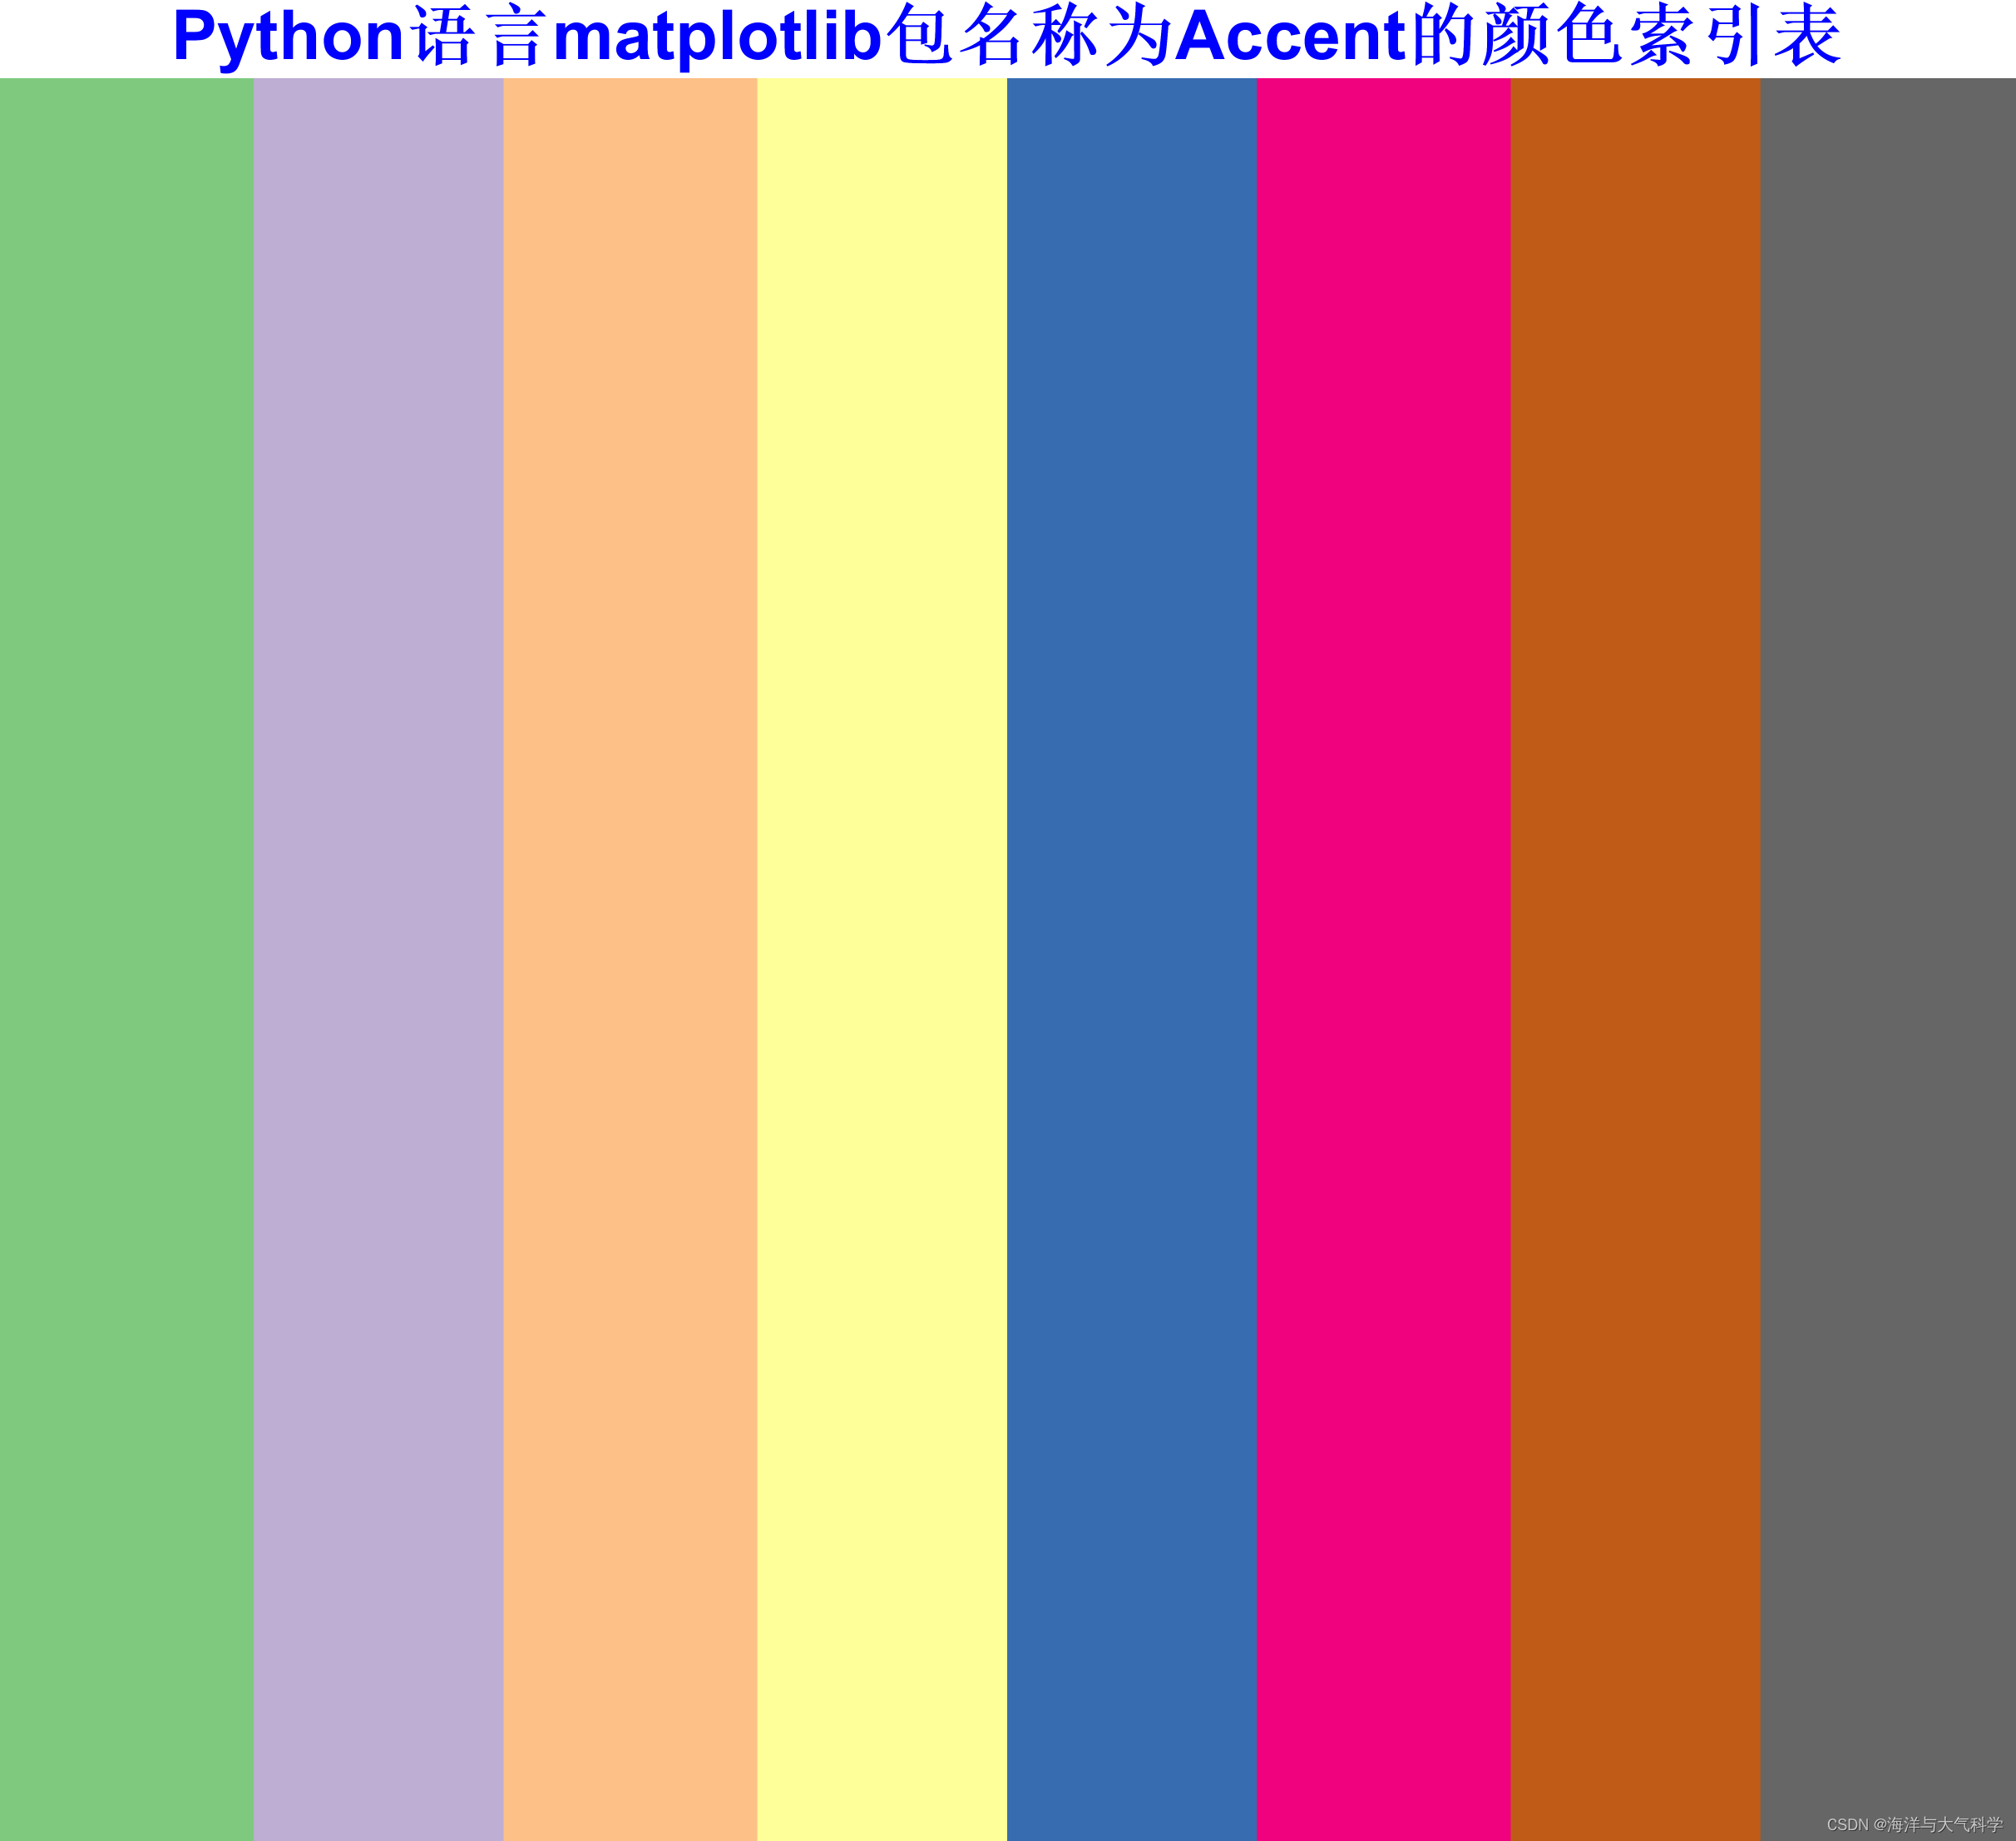 Python语言_matplotlib包_共80种--全平台可用